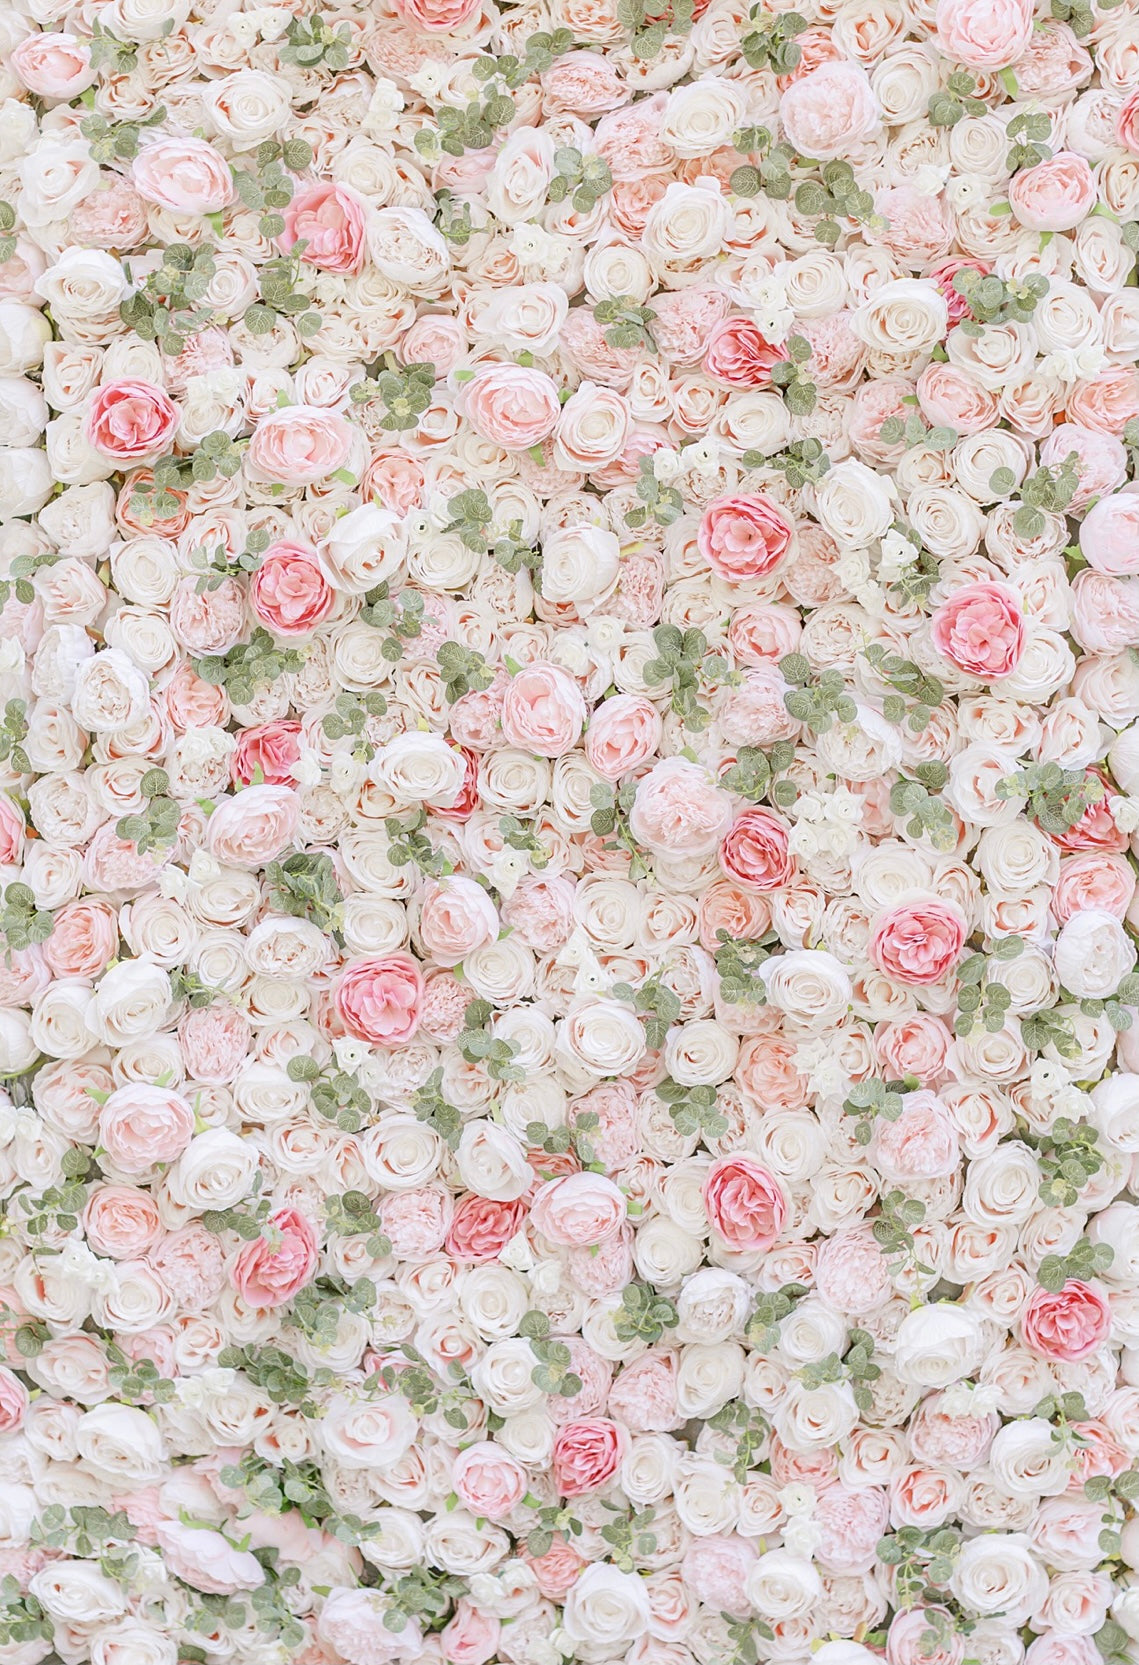 Flower Wall - Rosa (8x8)